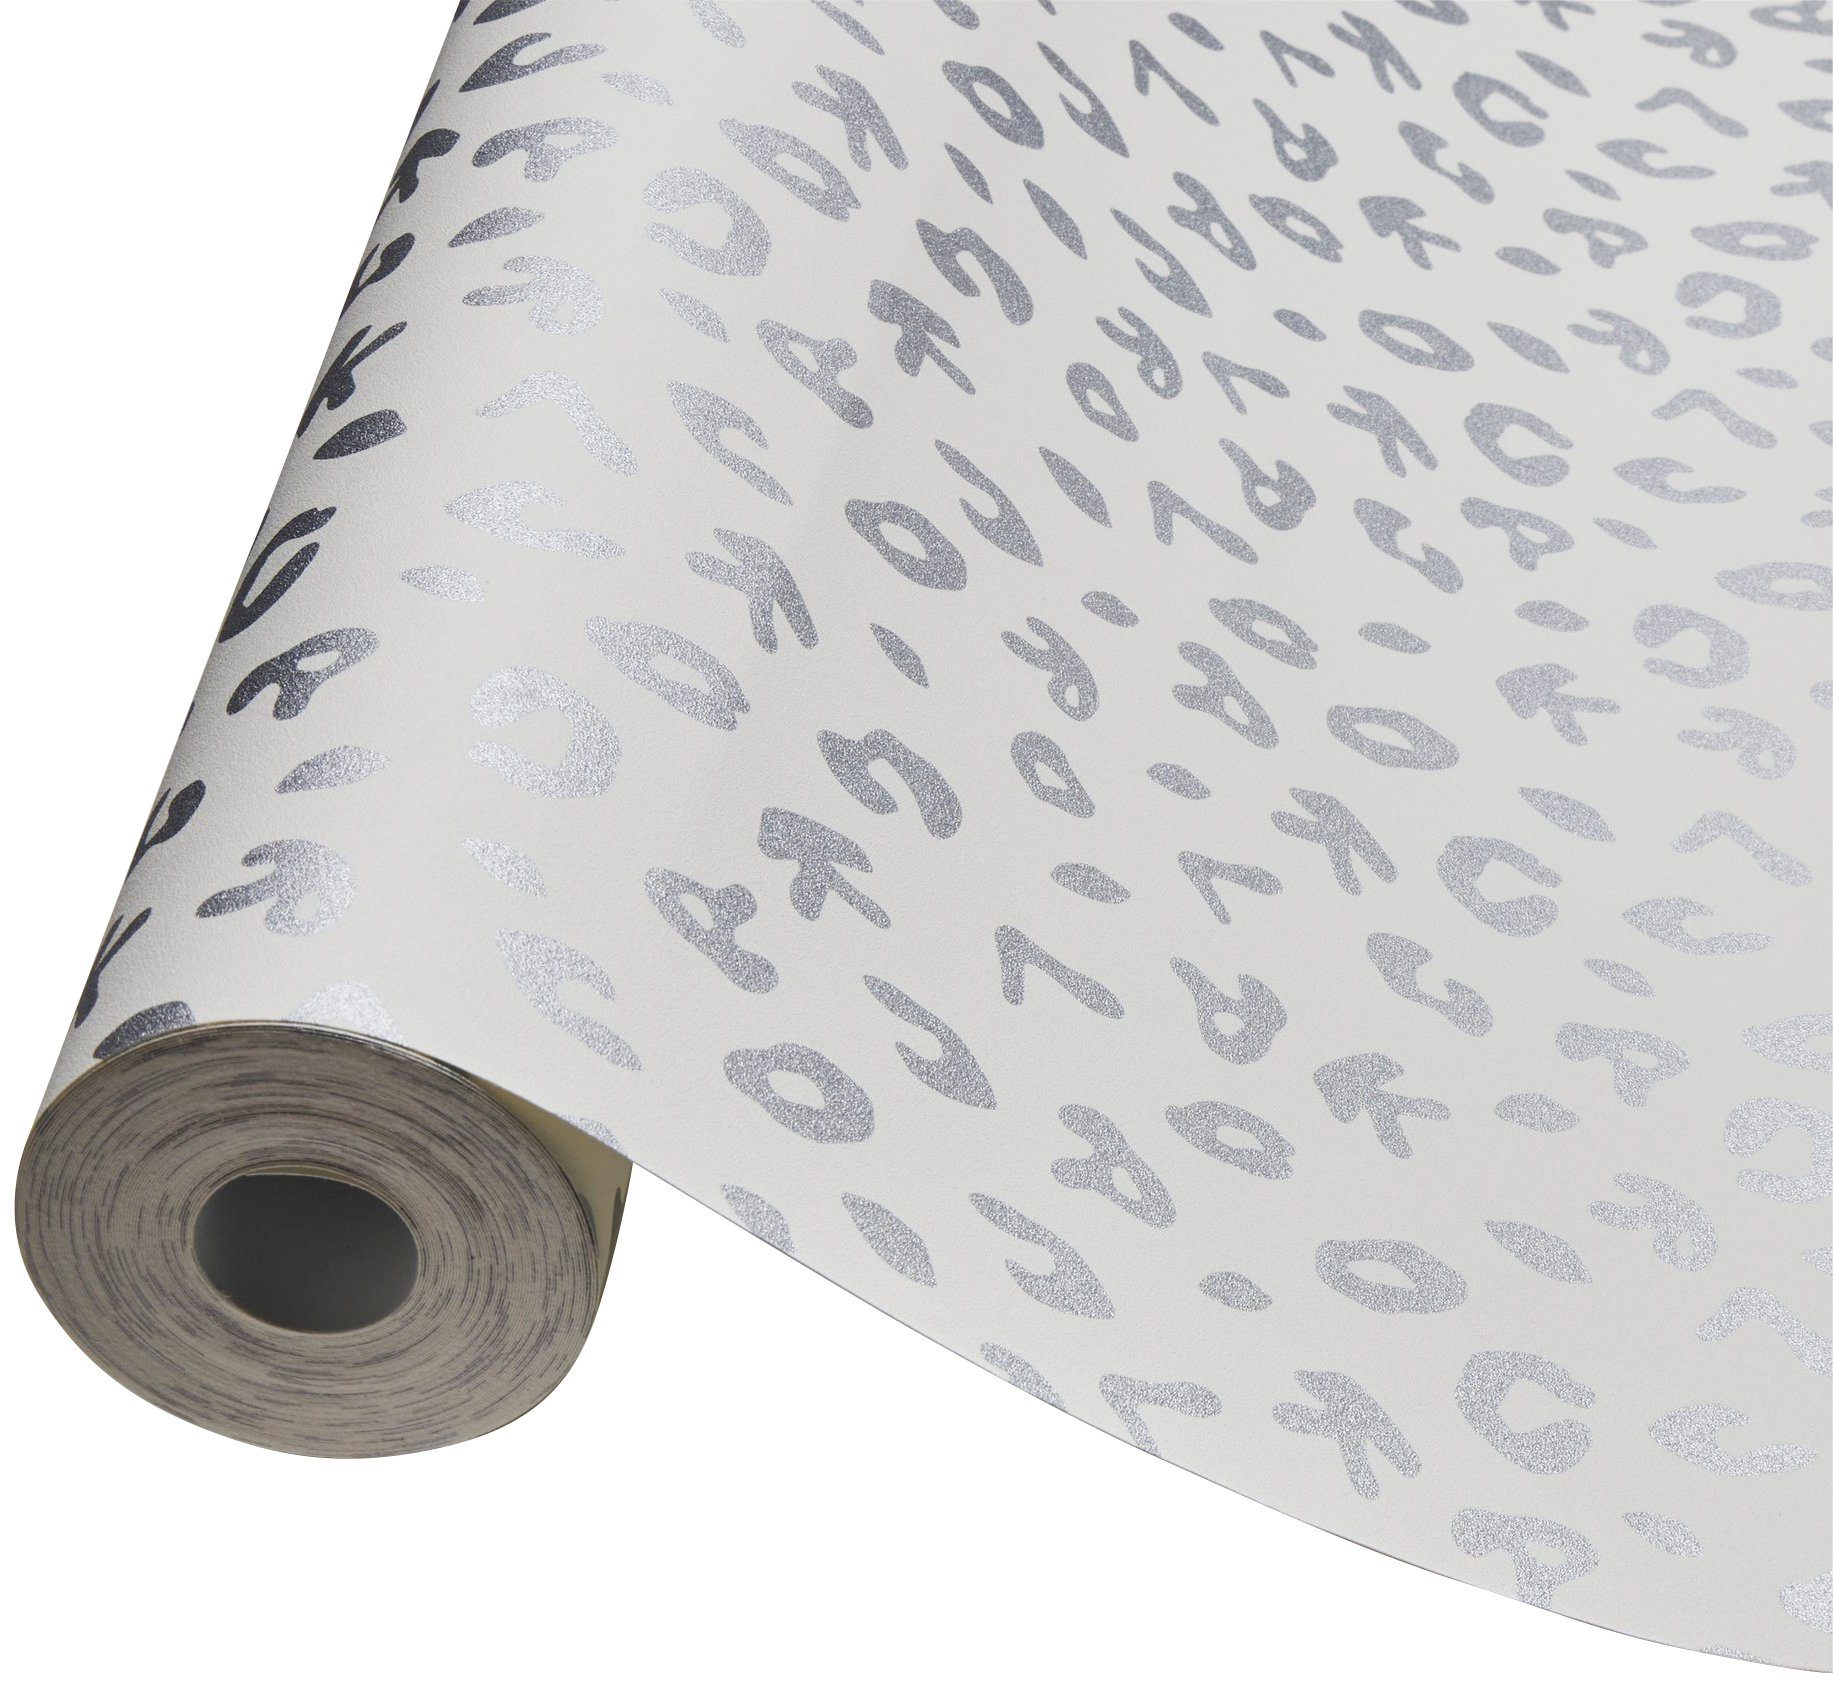 Ausgefallene A.S. silber/weiß/grau Metallic Vliestapete Tapete Lagerfeld Karl Architects Designer Leopard, Création Paper